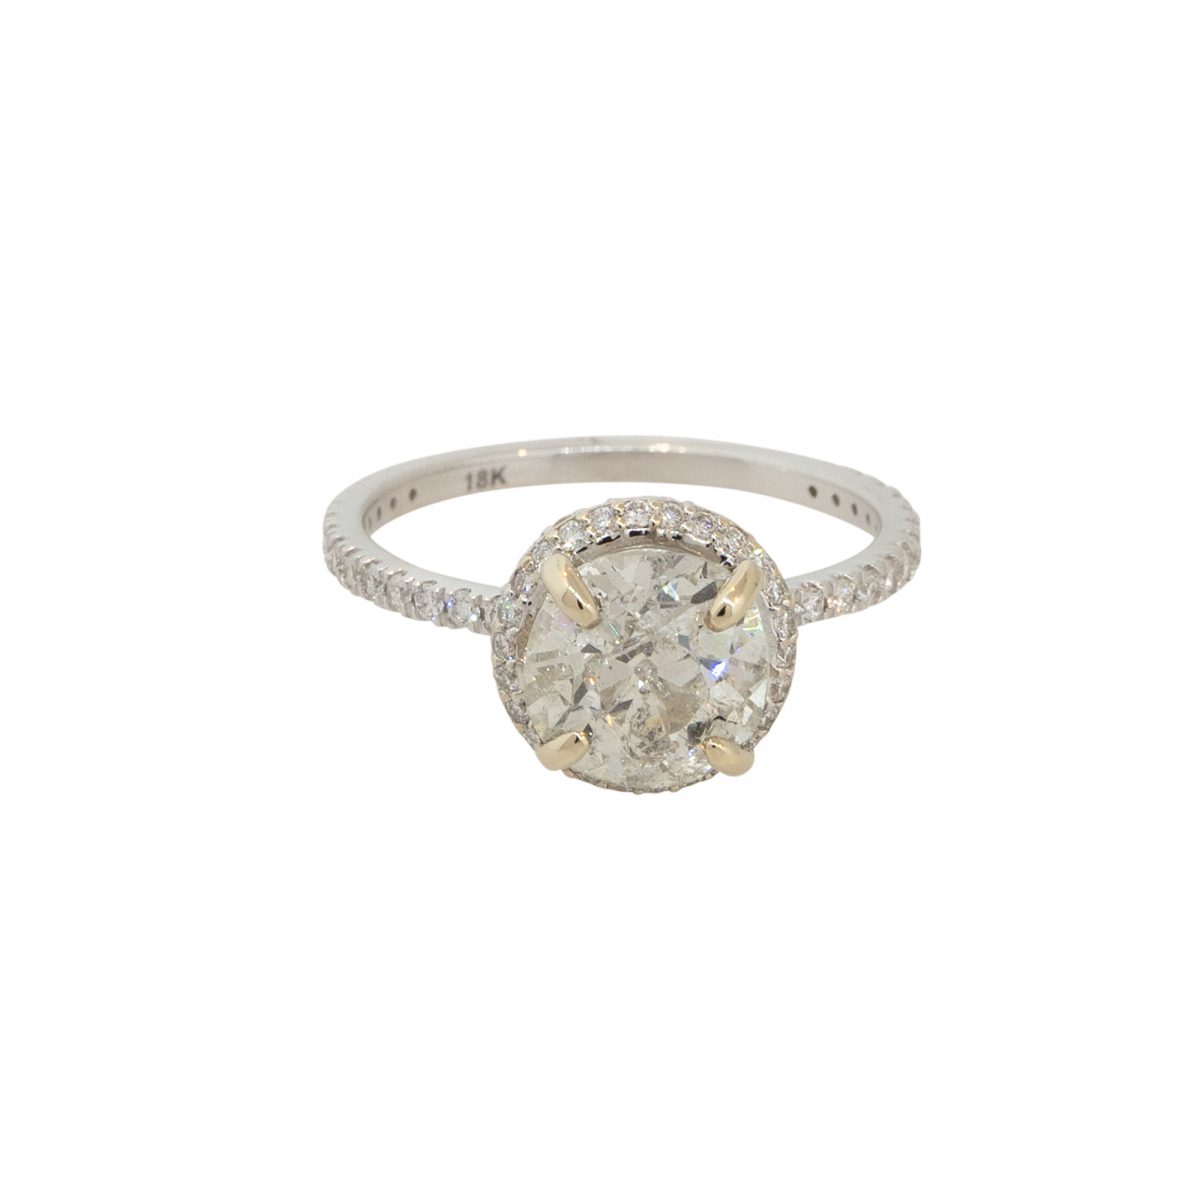 18k White Gold 2.52ctw Old Euro Cut Diamond Halo Engagement Ring